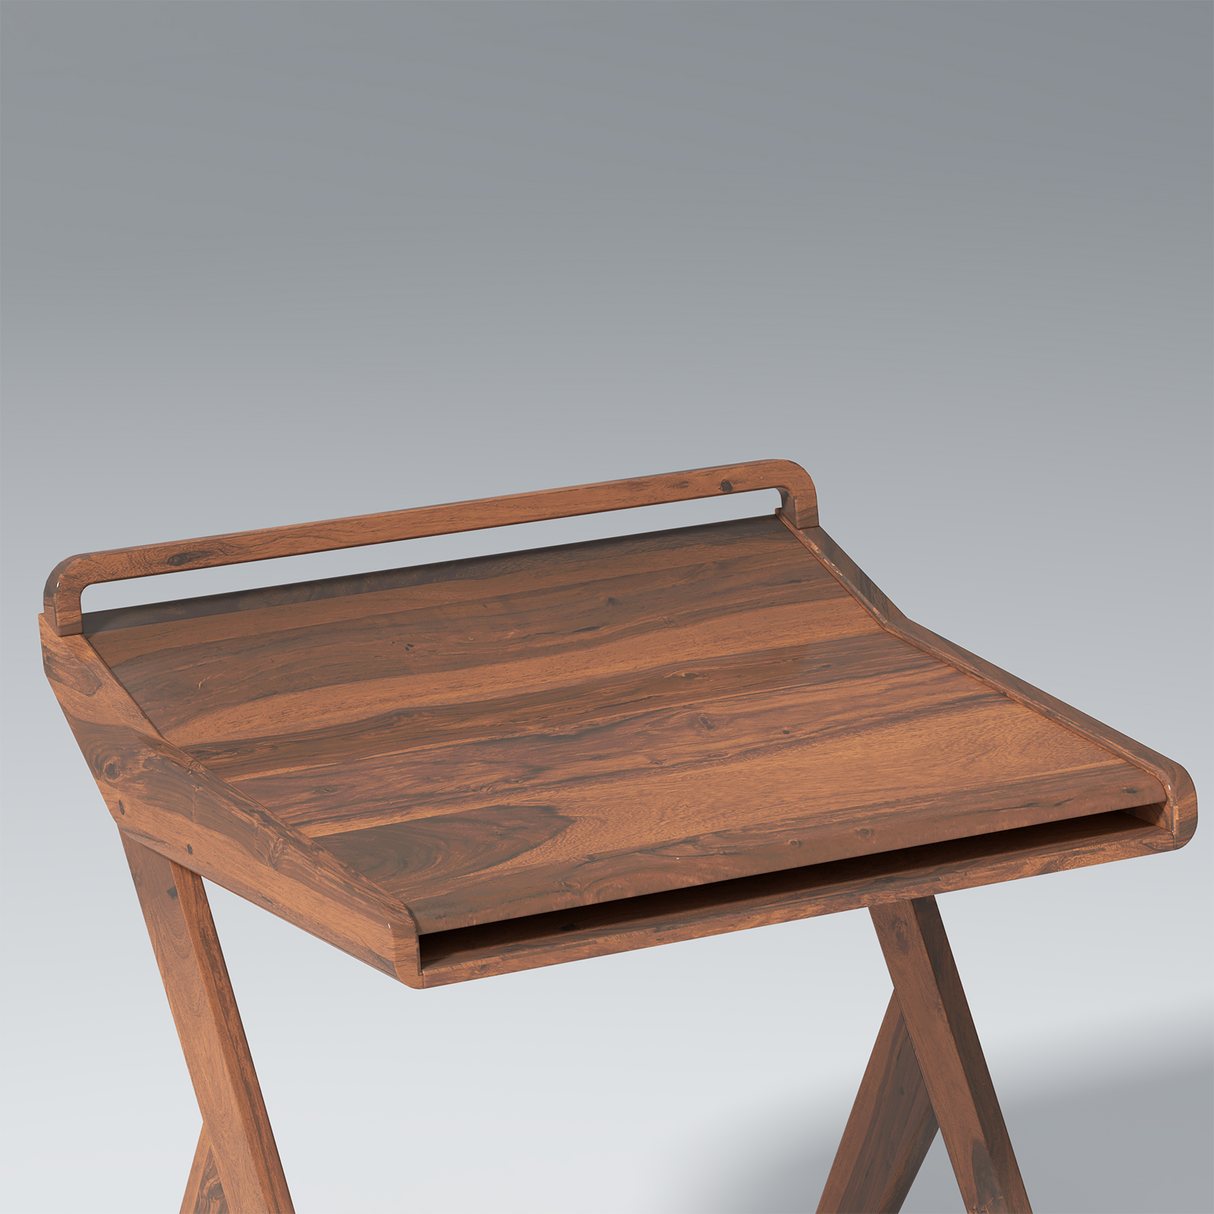 Chopin Sheesham Wood Study Table In Light Walnut Color